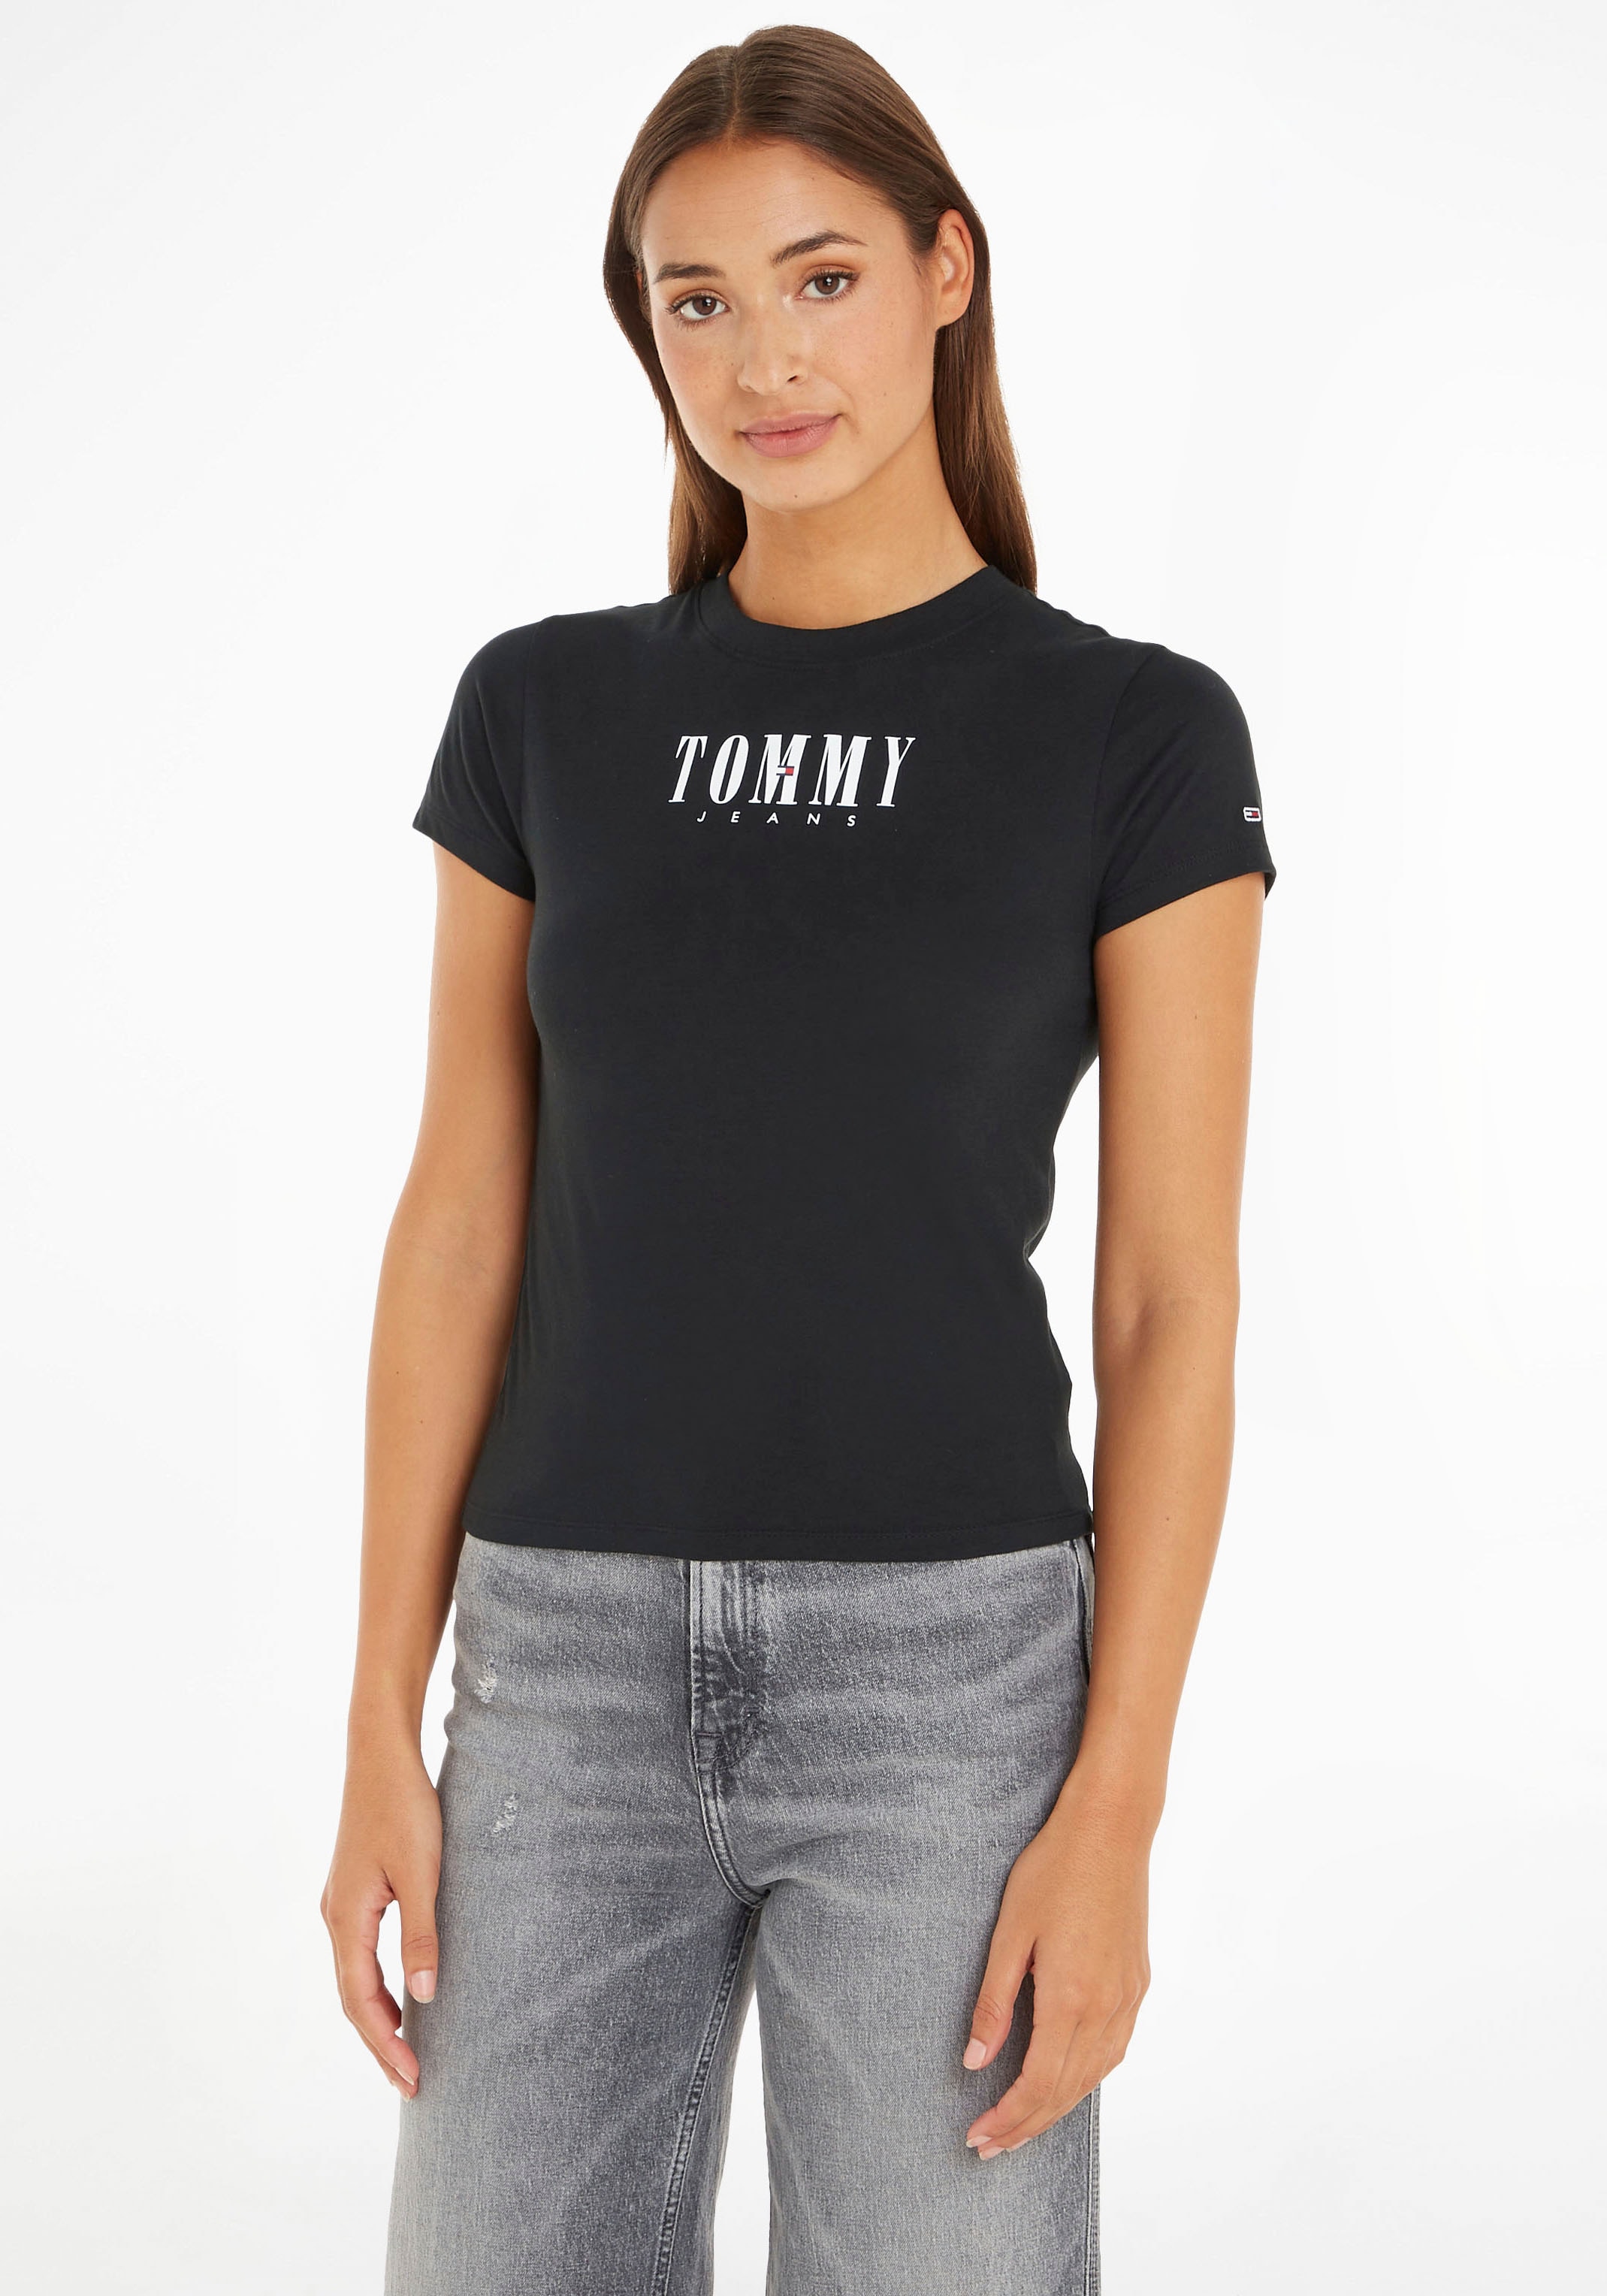 kaufen »TJW mit Kurzarmshirt Logo-Schriftzug 2 ESSENTIAL SS«, Jeans Tommy LOGO online Tommy Jeans BABY